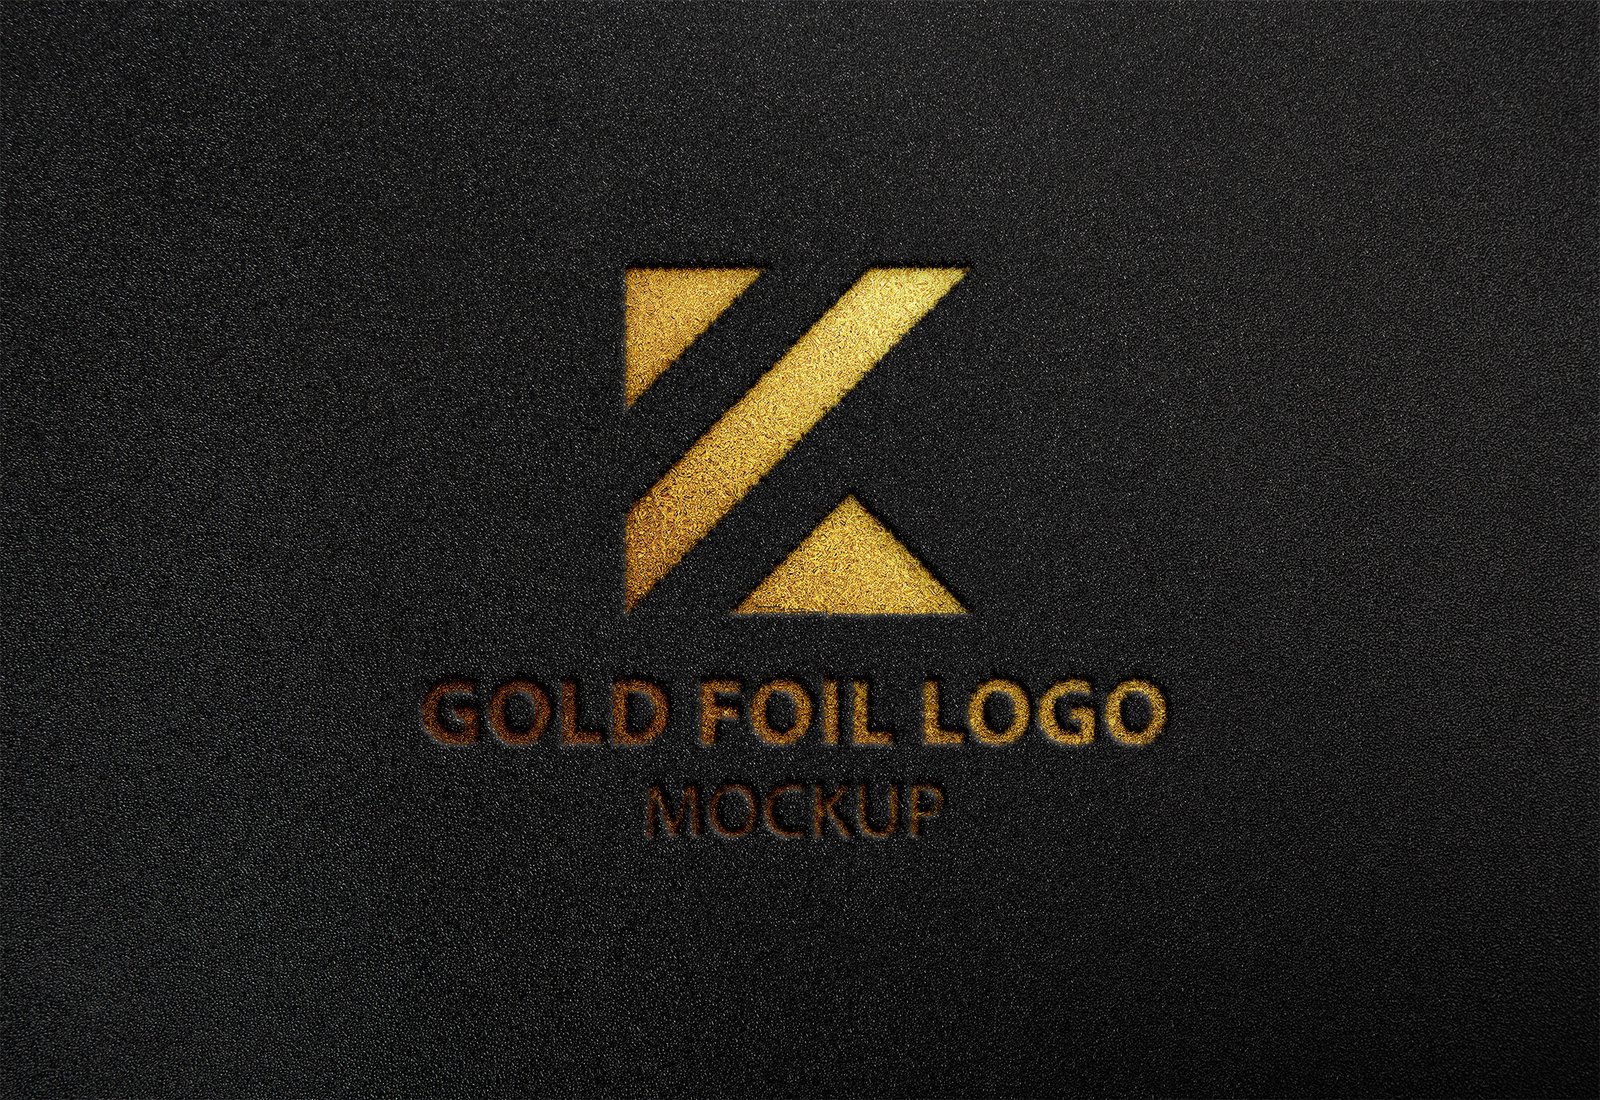 Free Gold Foil Logo Mockup Vol 2 PSD Template - Mockup Den